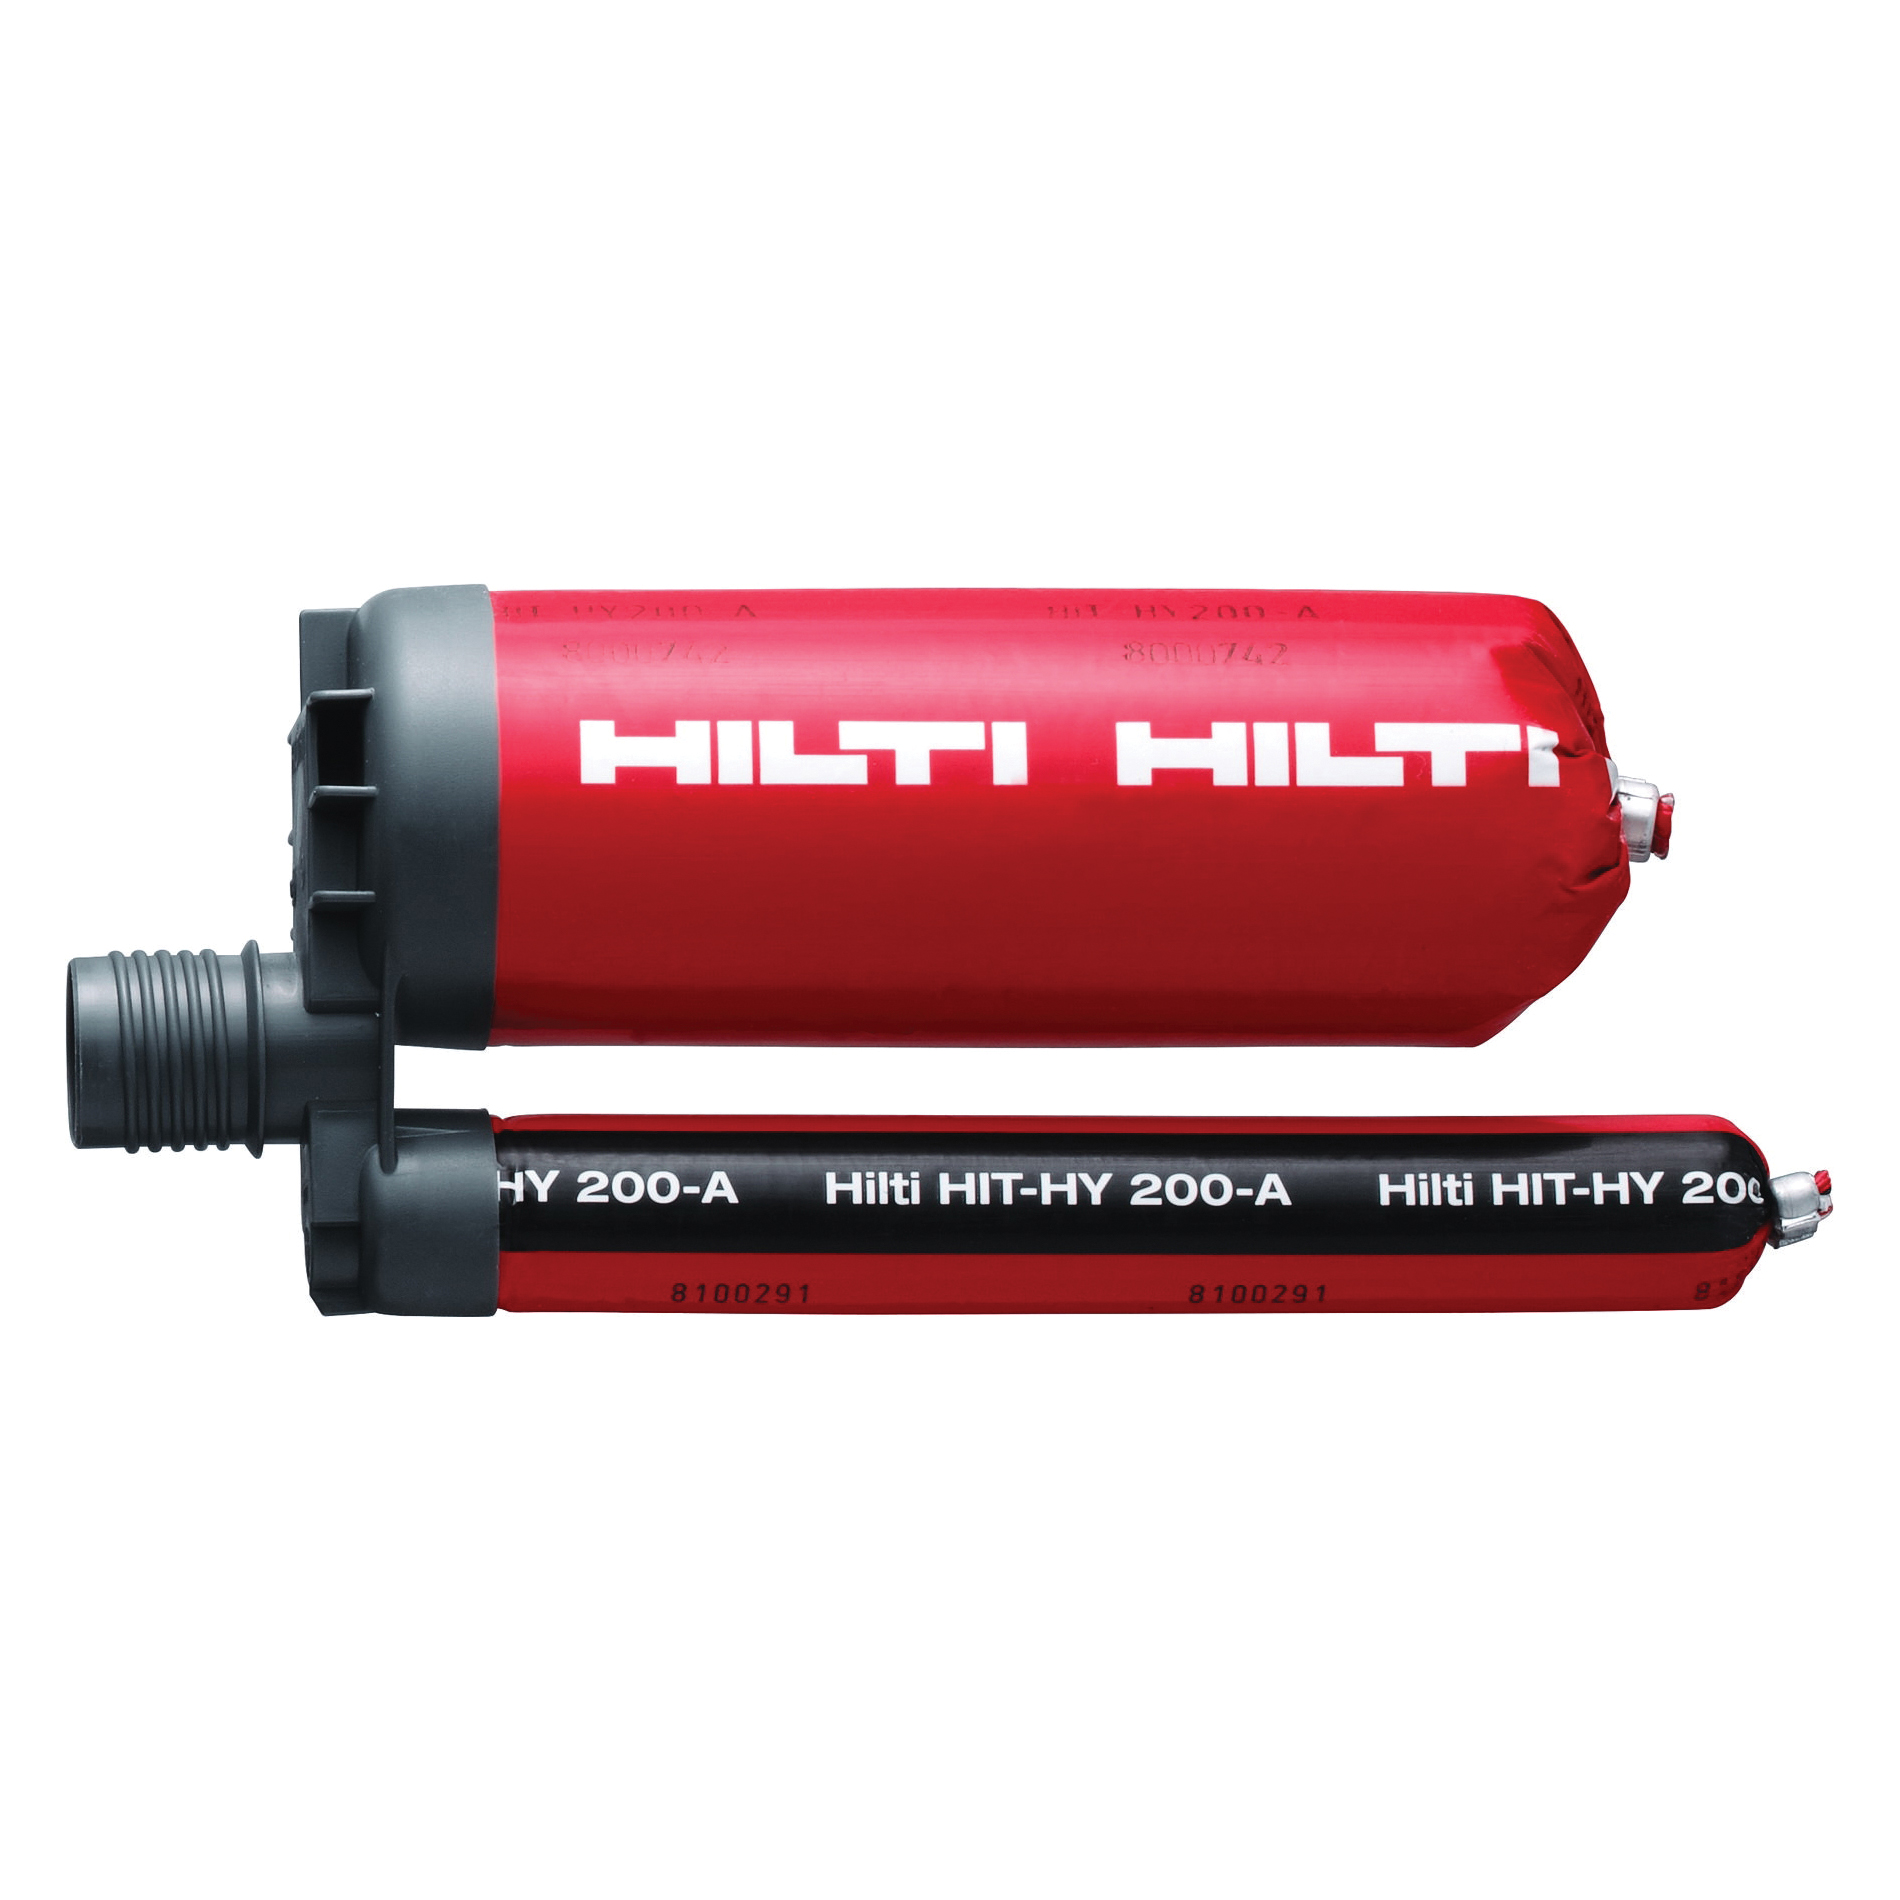 HILTI 3496470 HIT-HY 200-A Hybrid Adhesive Mortar, 11.2 fl-oz Can, Mixture Form, Part A: Light Gray/Part B: White